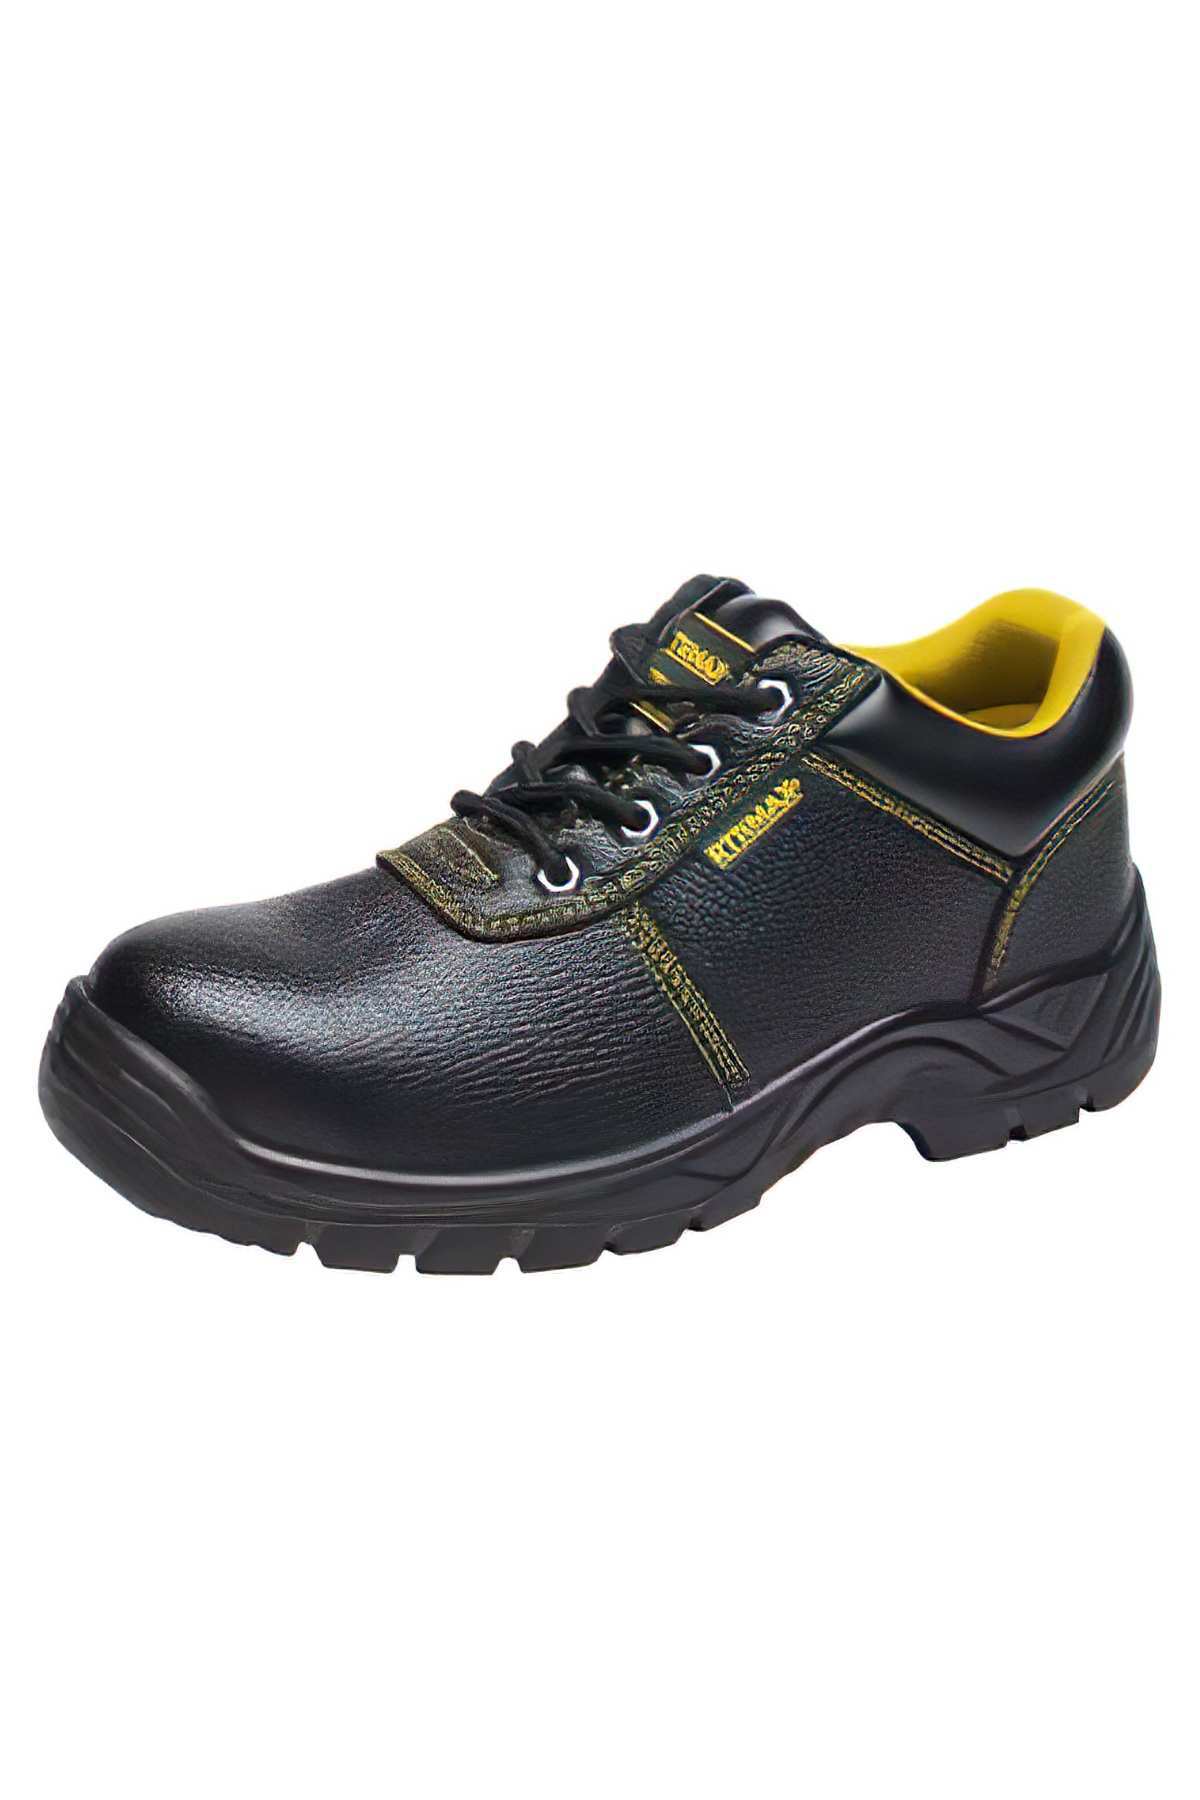 RTRMAX RHS2642 Güvenlik Ayakkabısı 